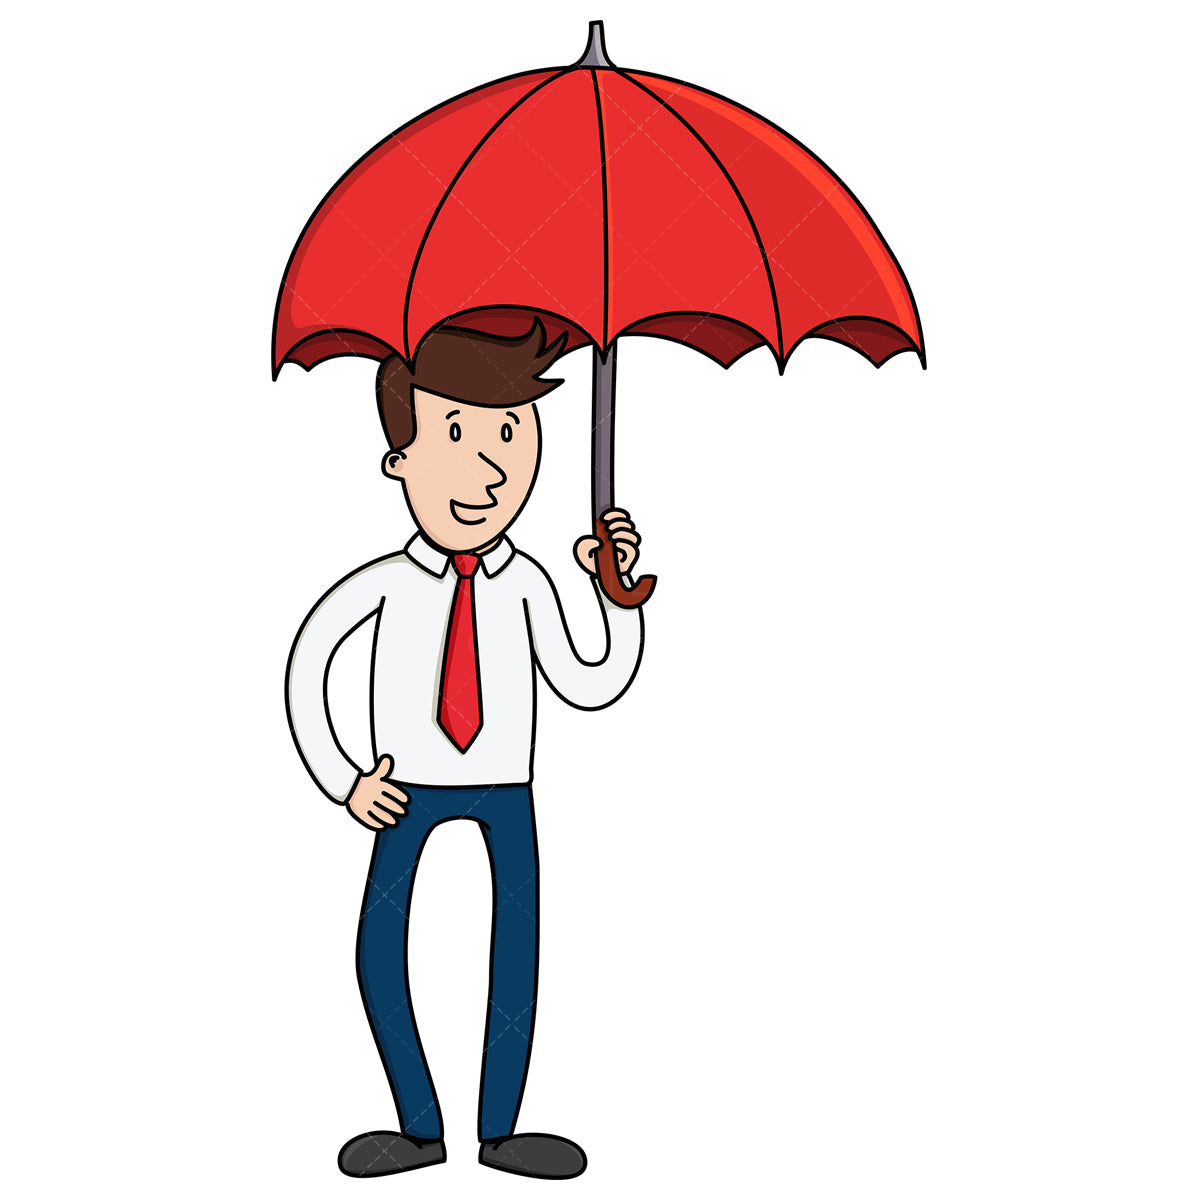 Royalty-free stock vector illustration of a businessman holding umbrella.